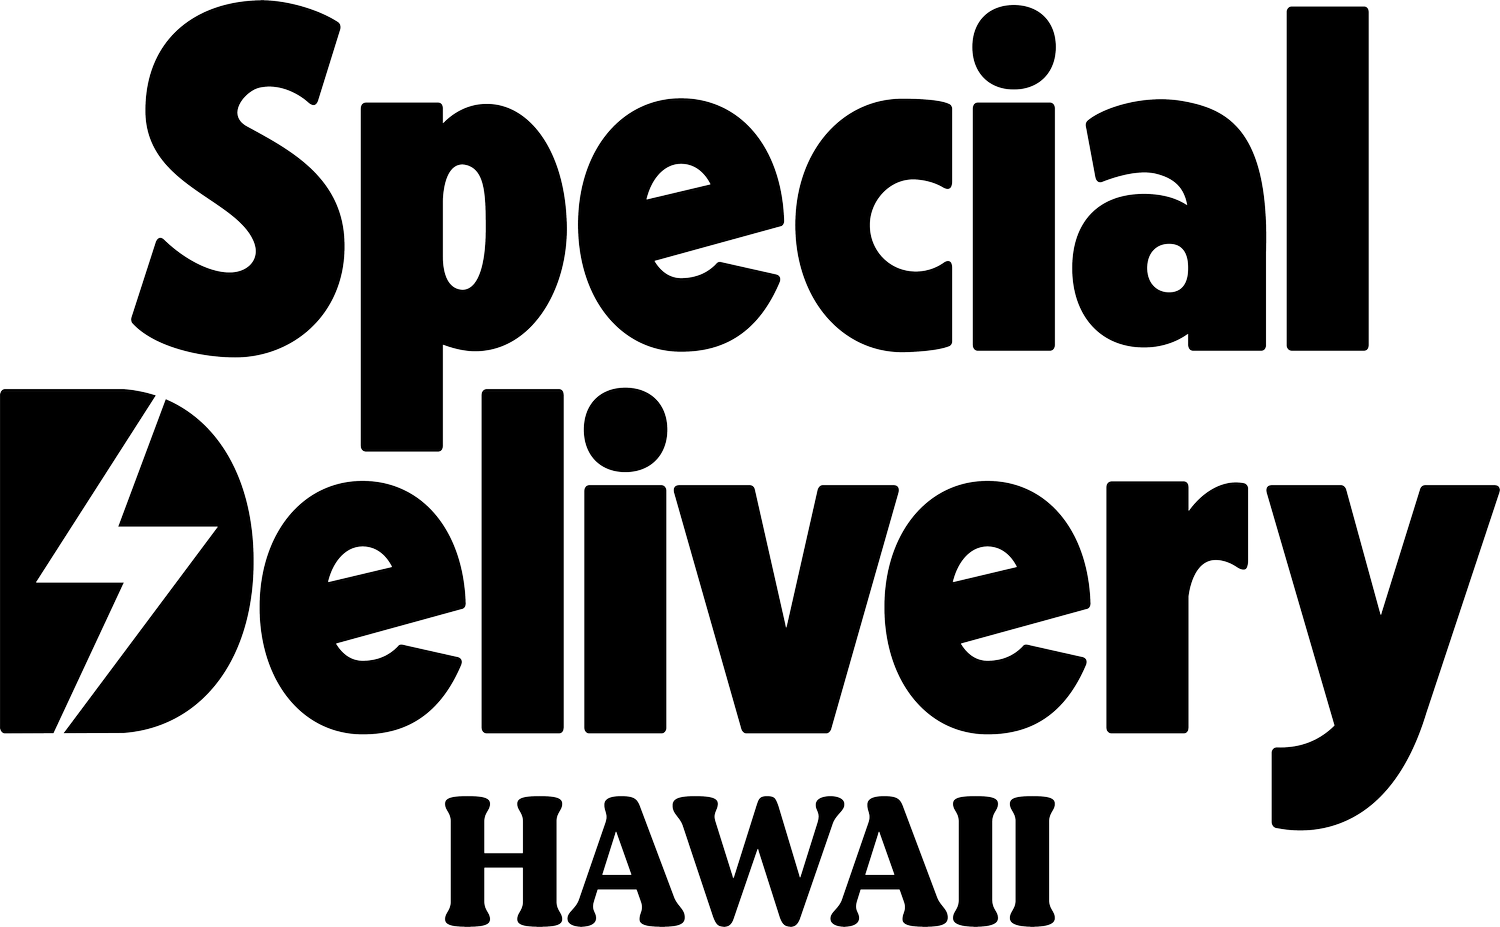 Special Delivery Hawaii